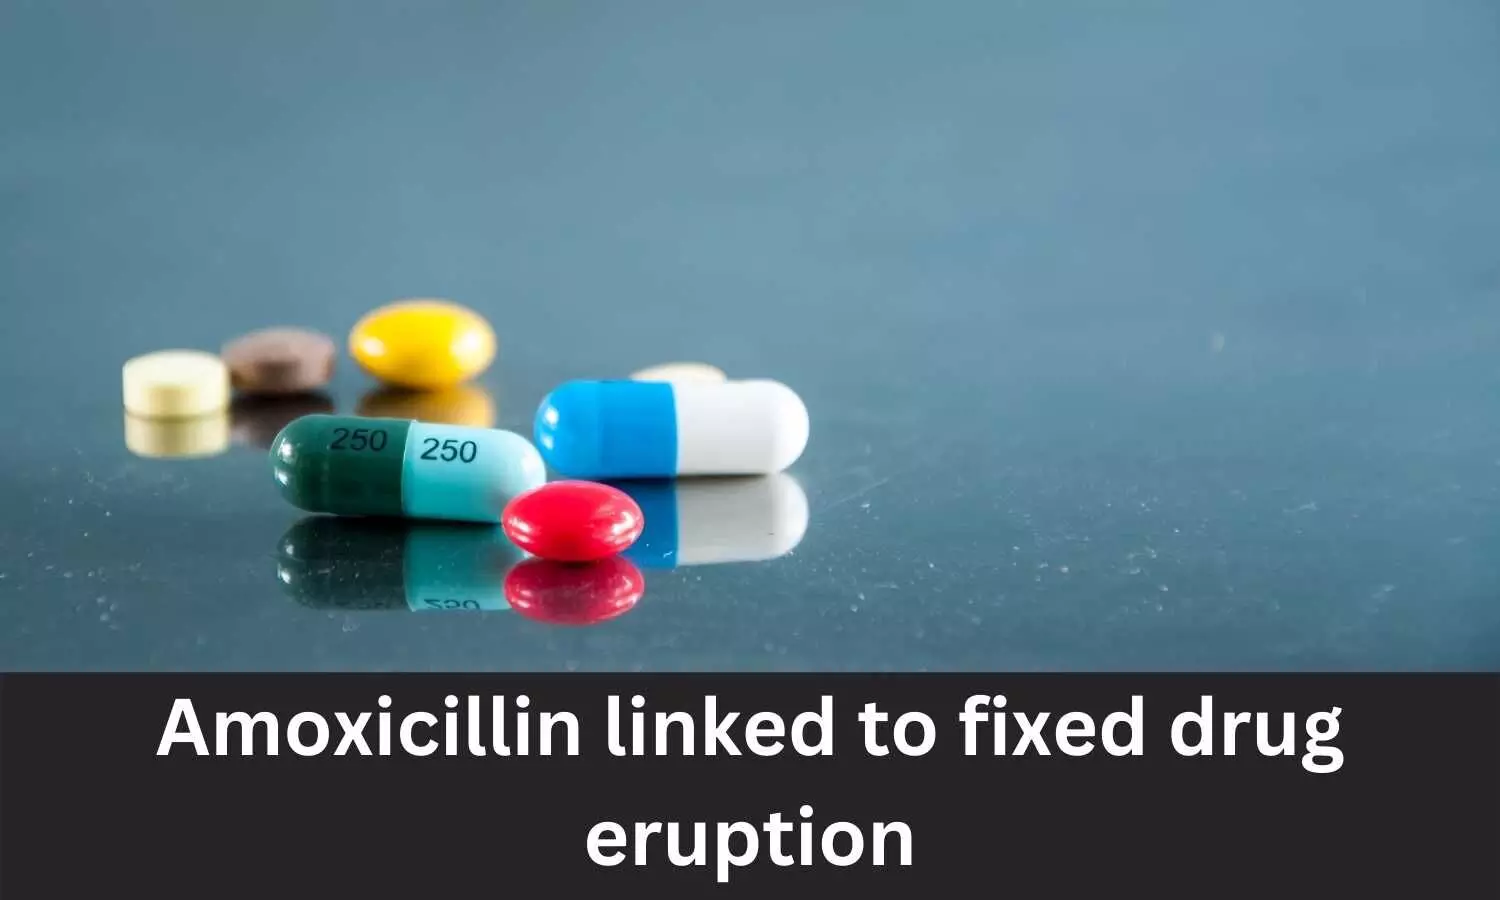 Amoxicillin linked to Fixed Drug Eruption, reveals IPC Drug Safety Alert